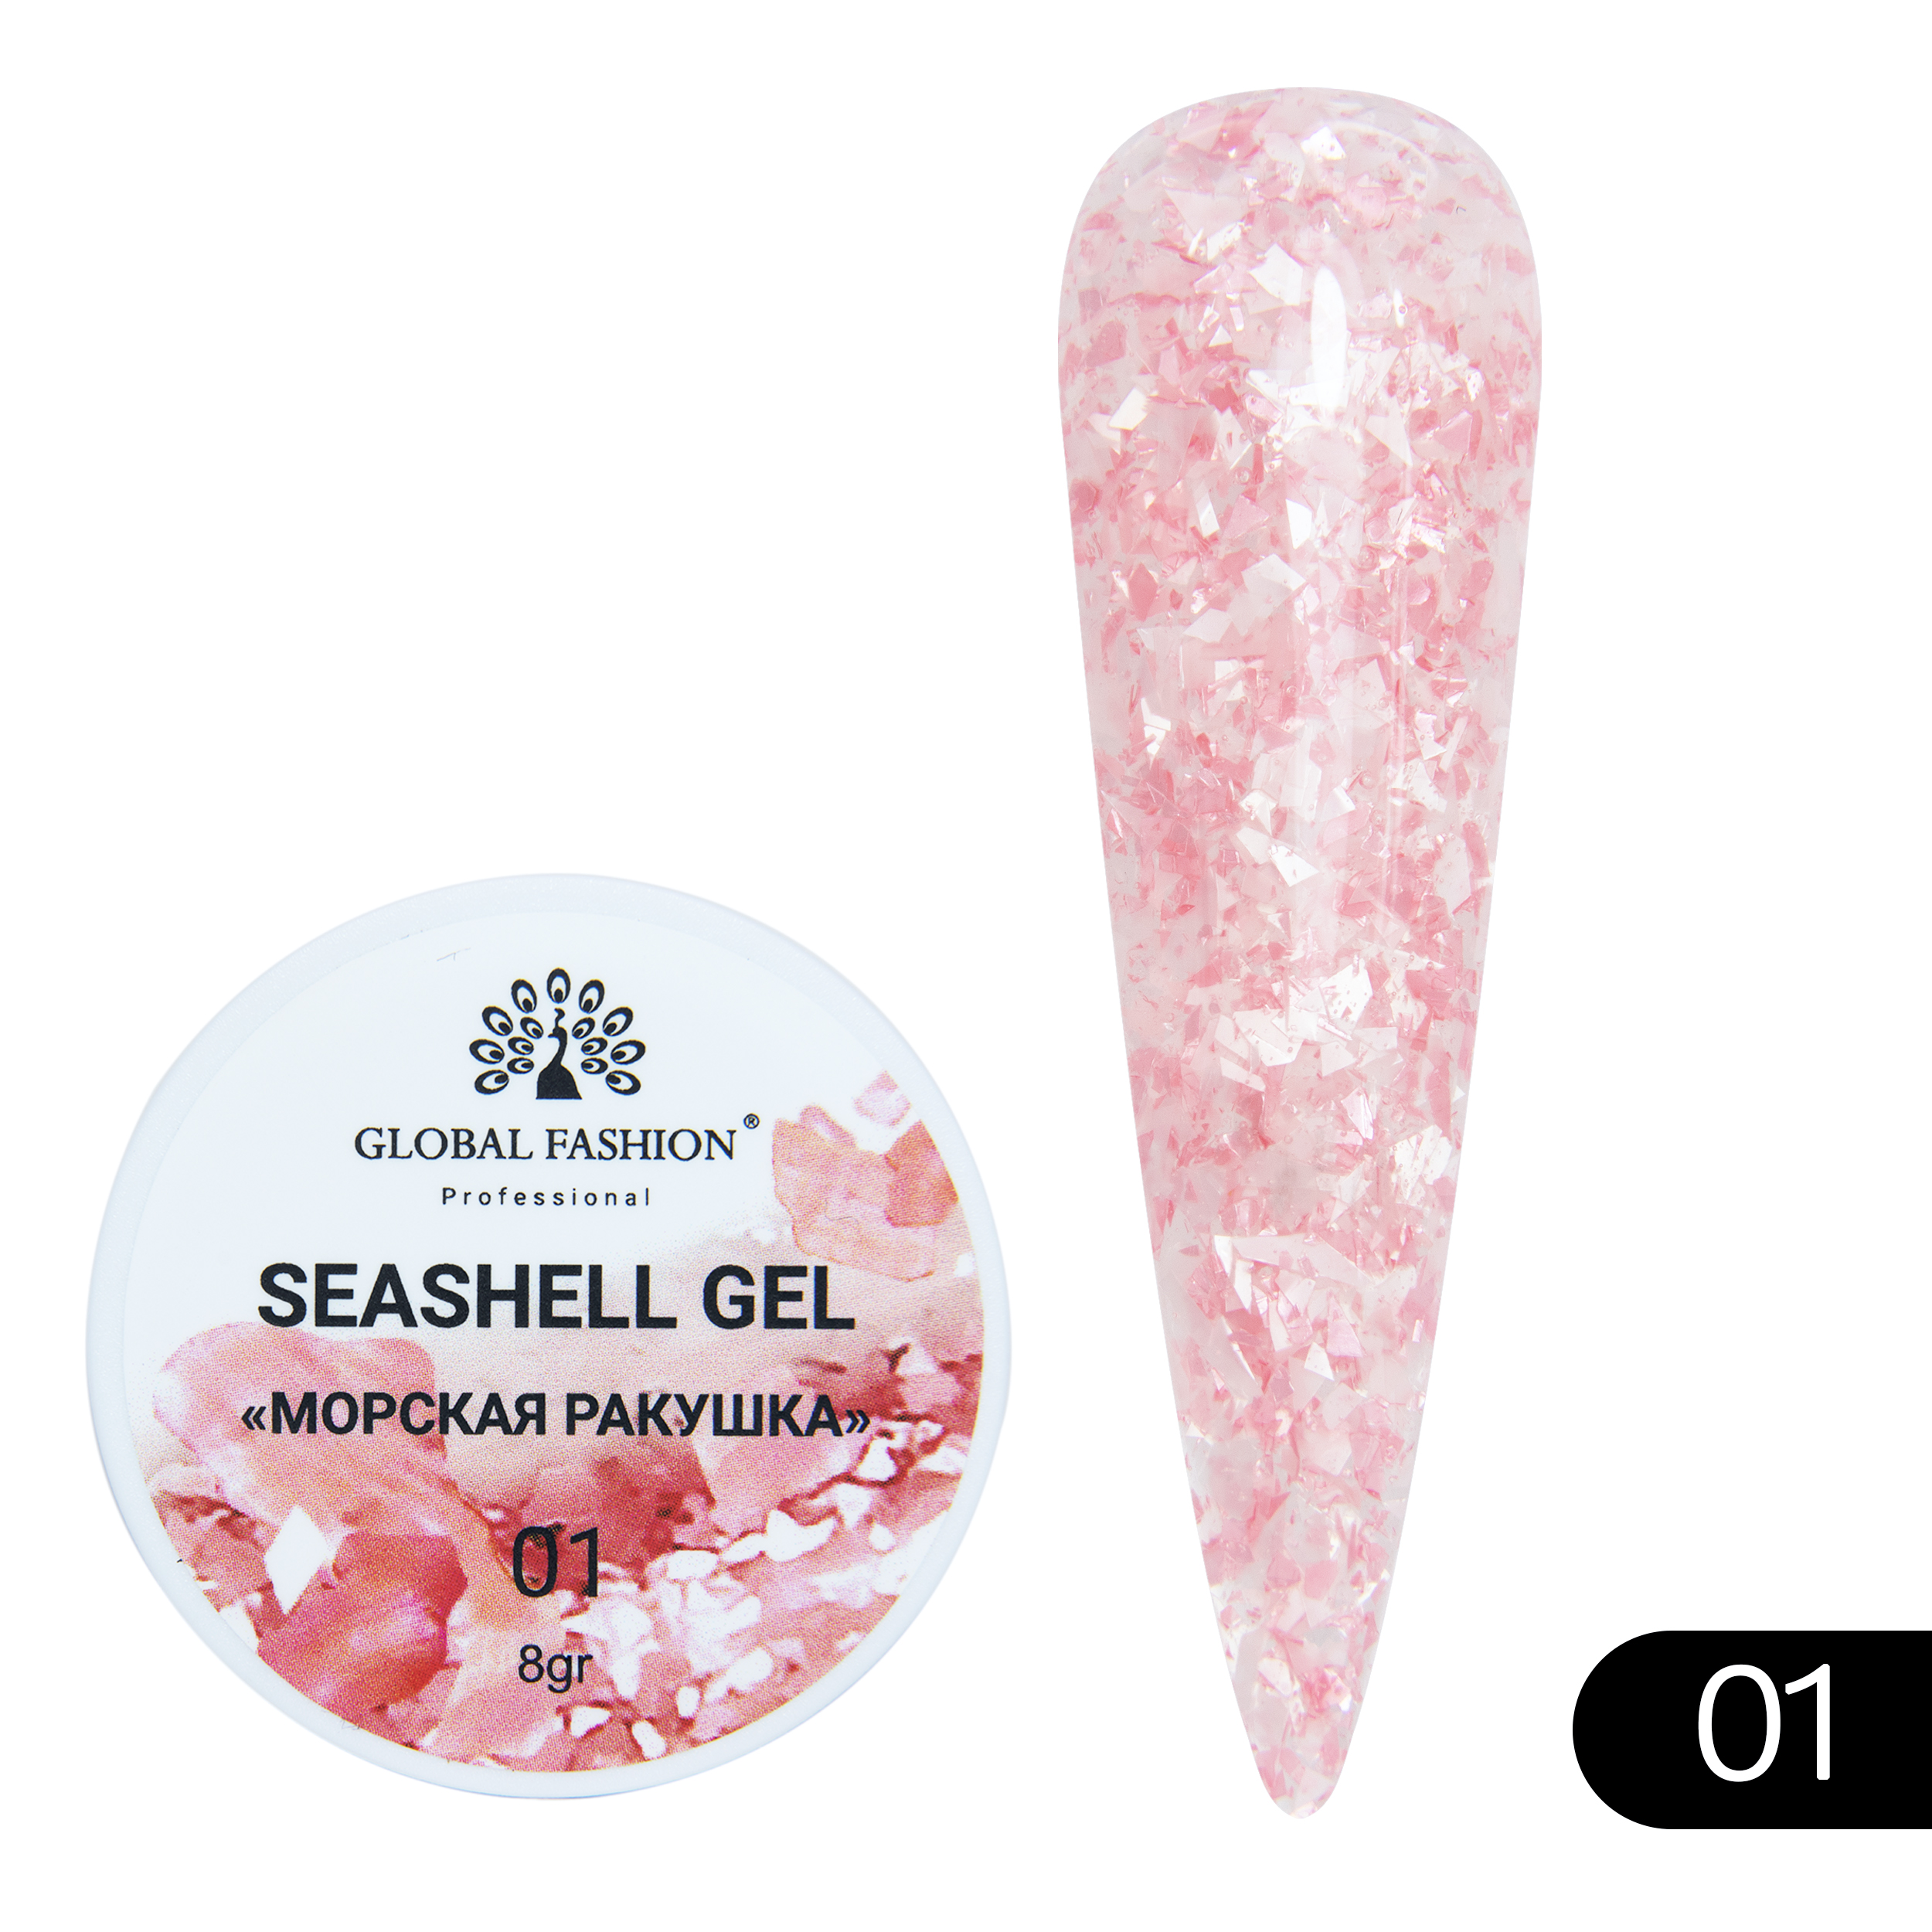 Гель-краска для ногтей Global Fashion Seashell Gel с мраморным эффектом ракушки №01 5 г сачок для аквариумных рыб дарэлл 10 12 см